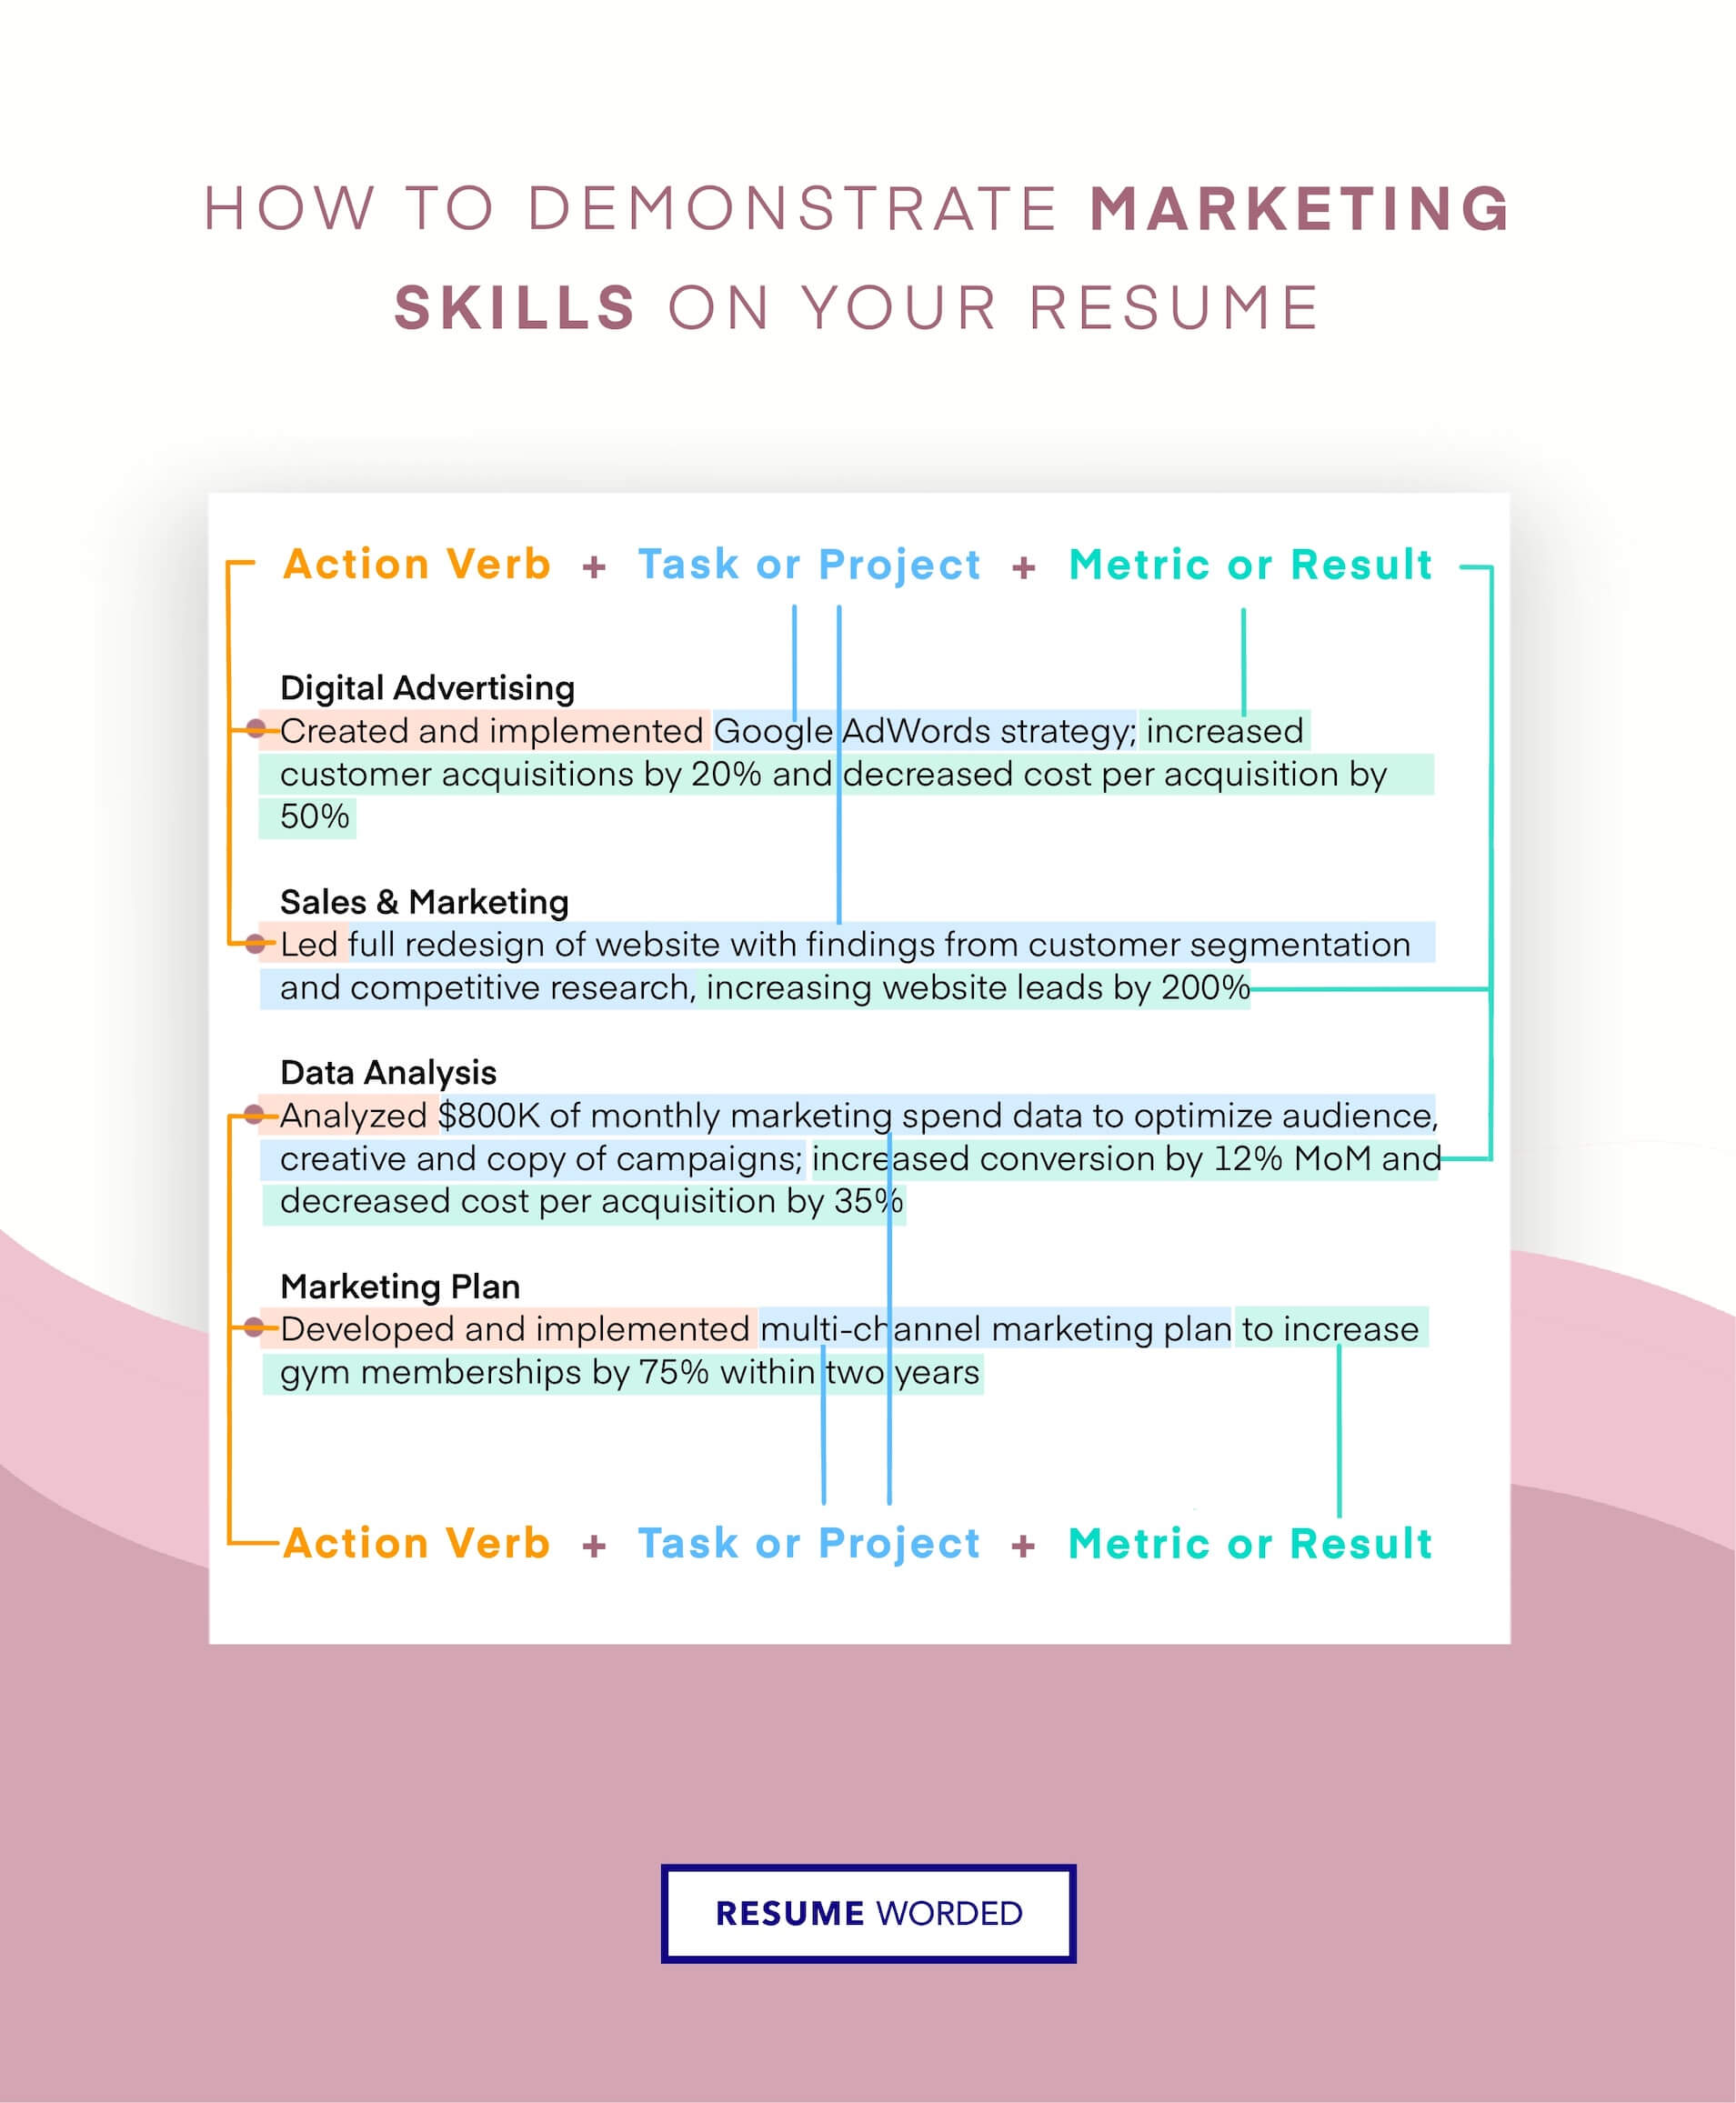 Showcase your digital marketing skills - Marketing Manager CV